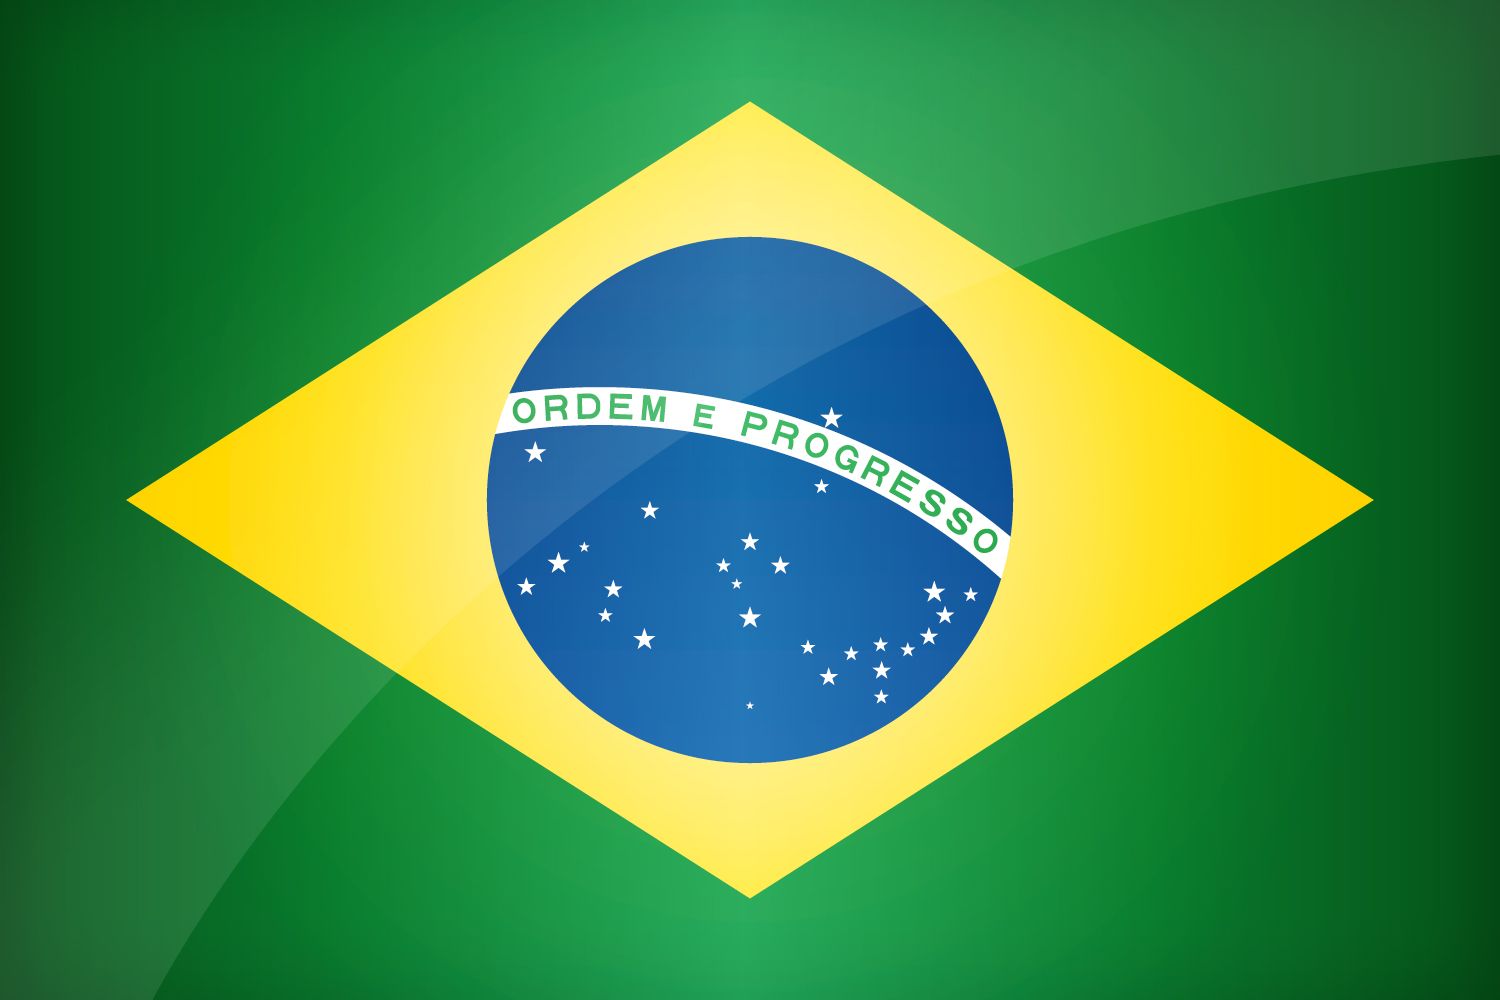 Brazil Flag and national motto "Ordem e Progresso"